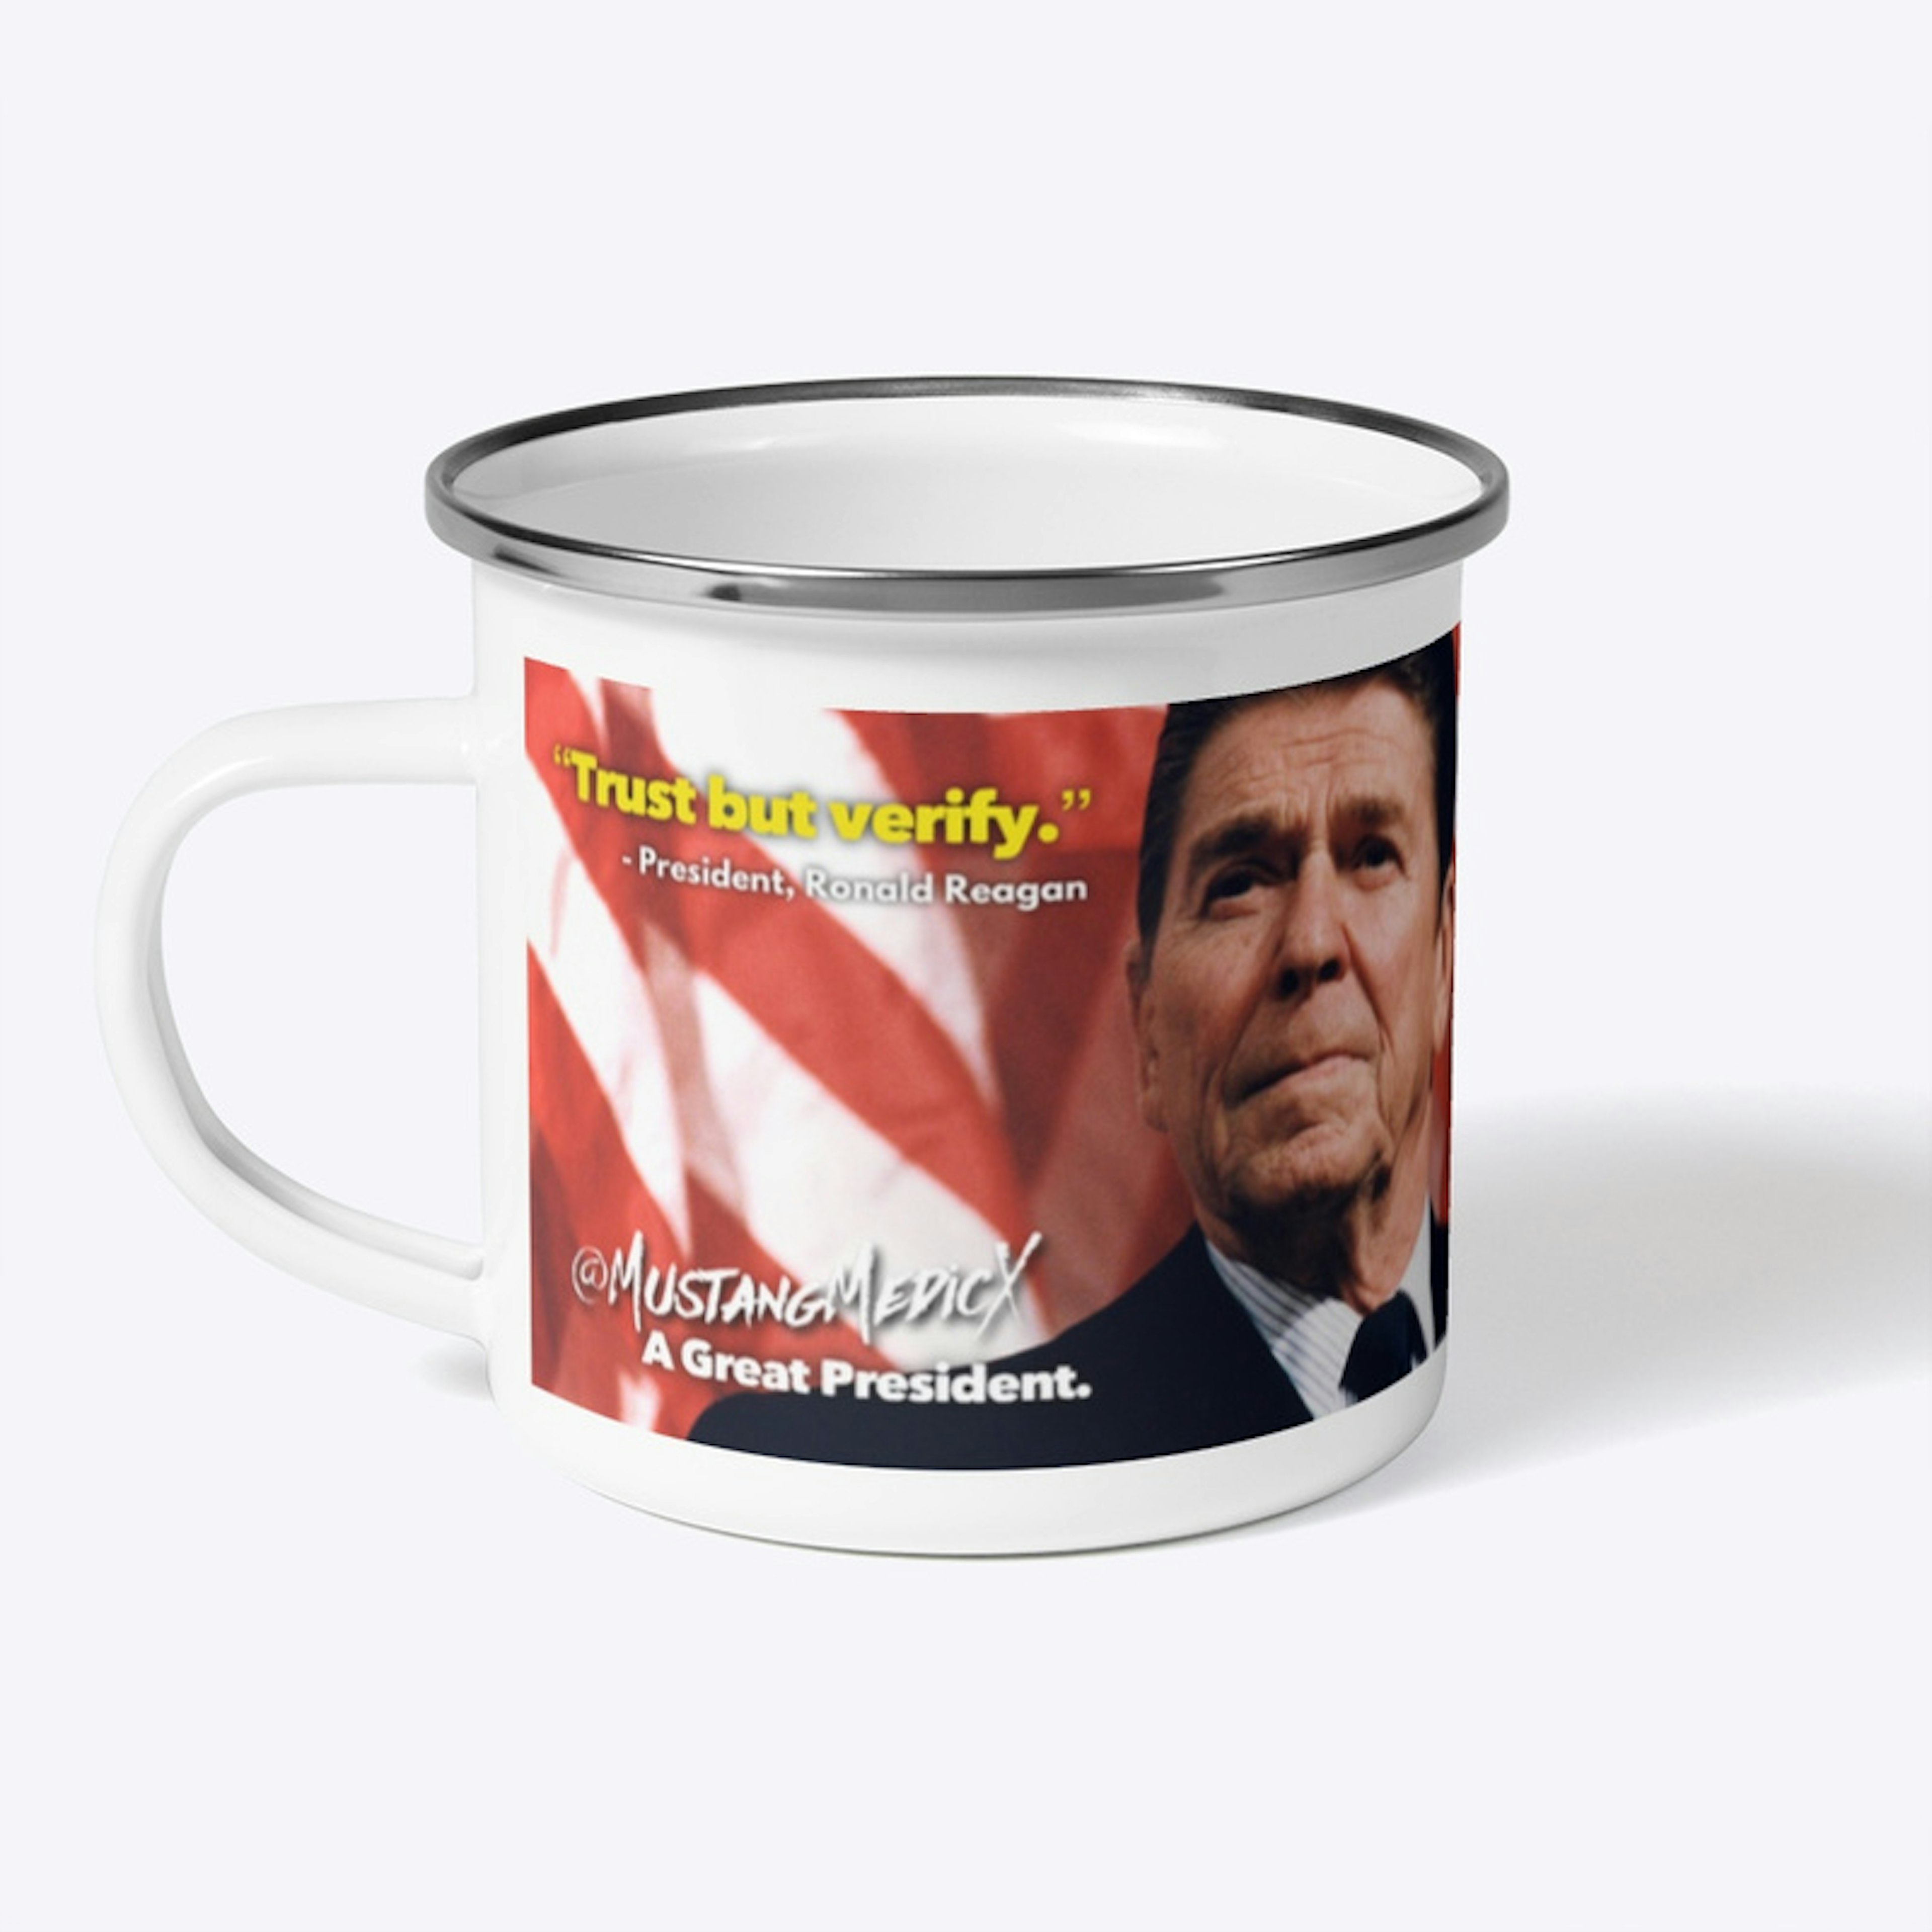 Ronald Reagan a Great President